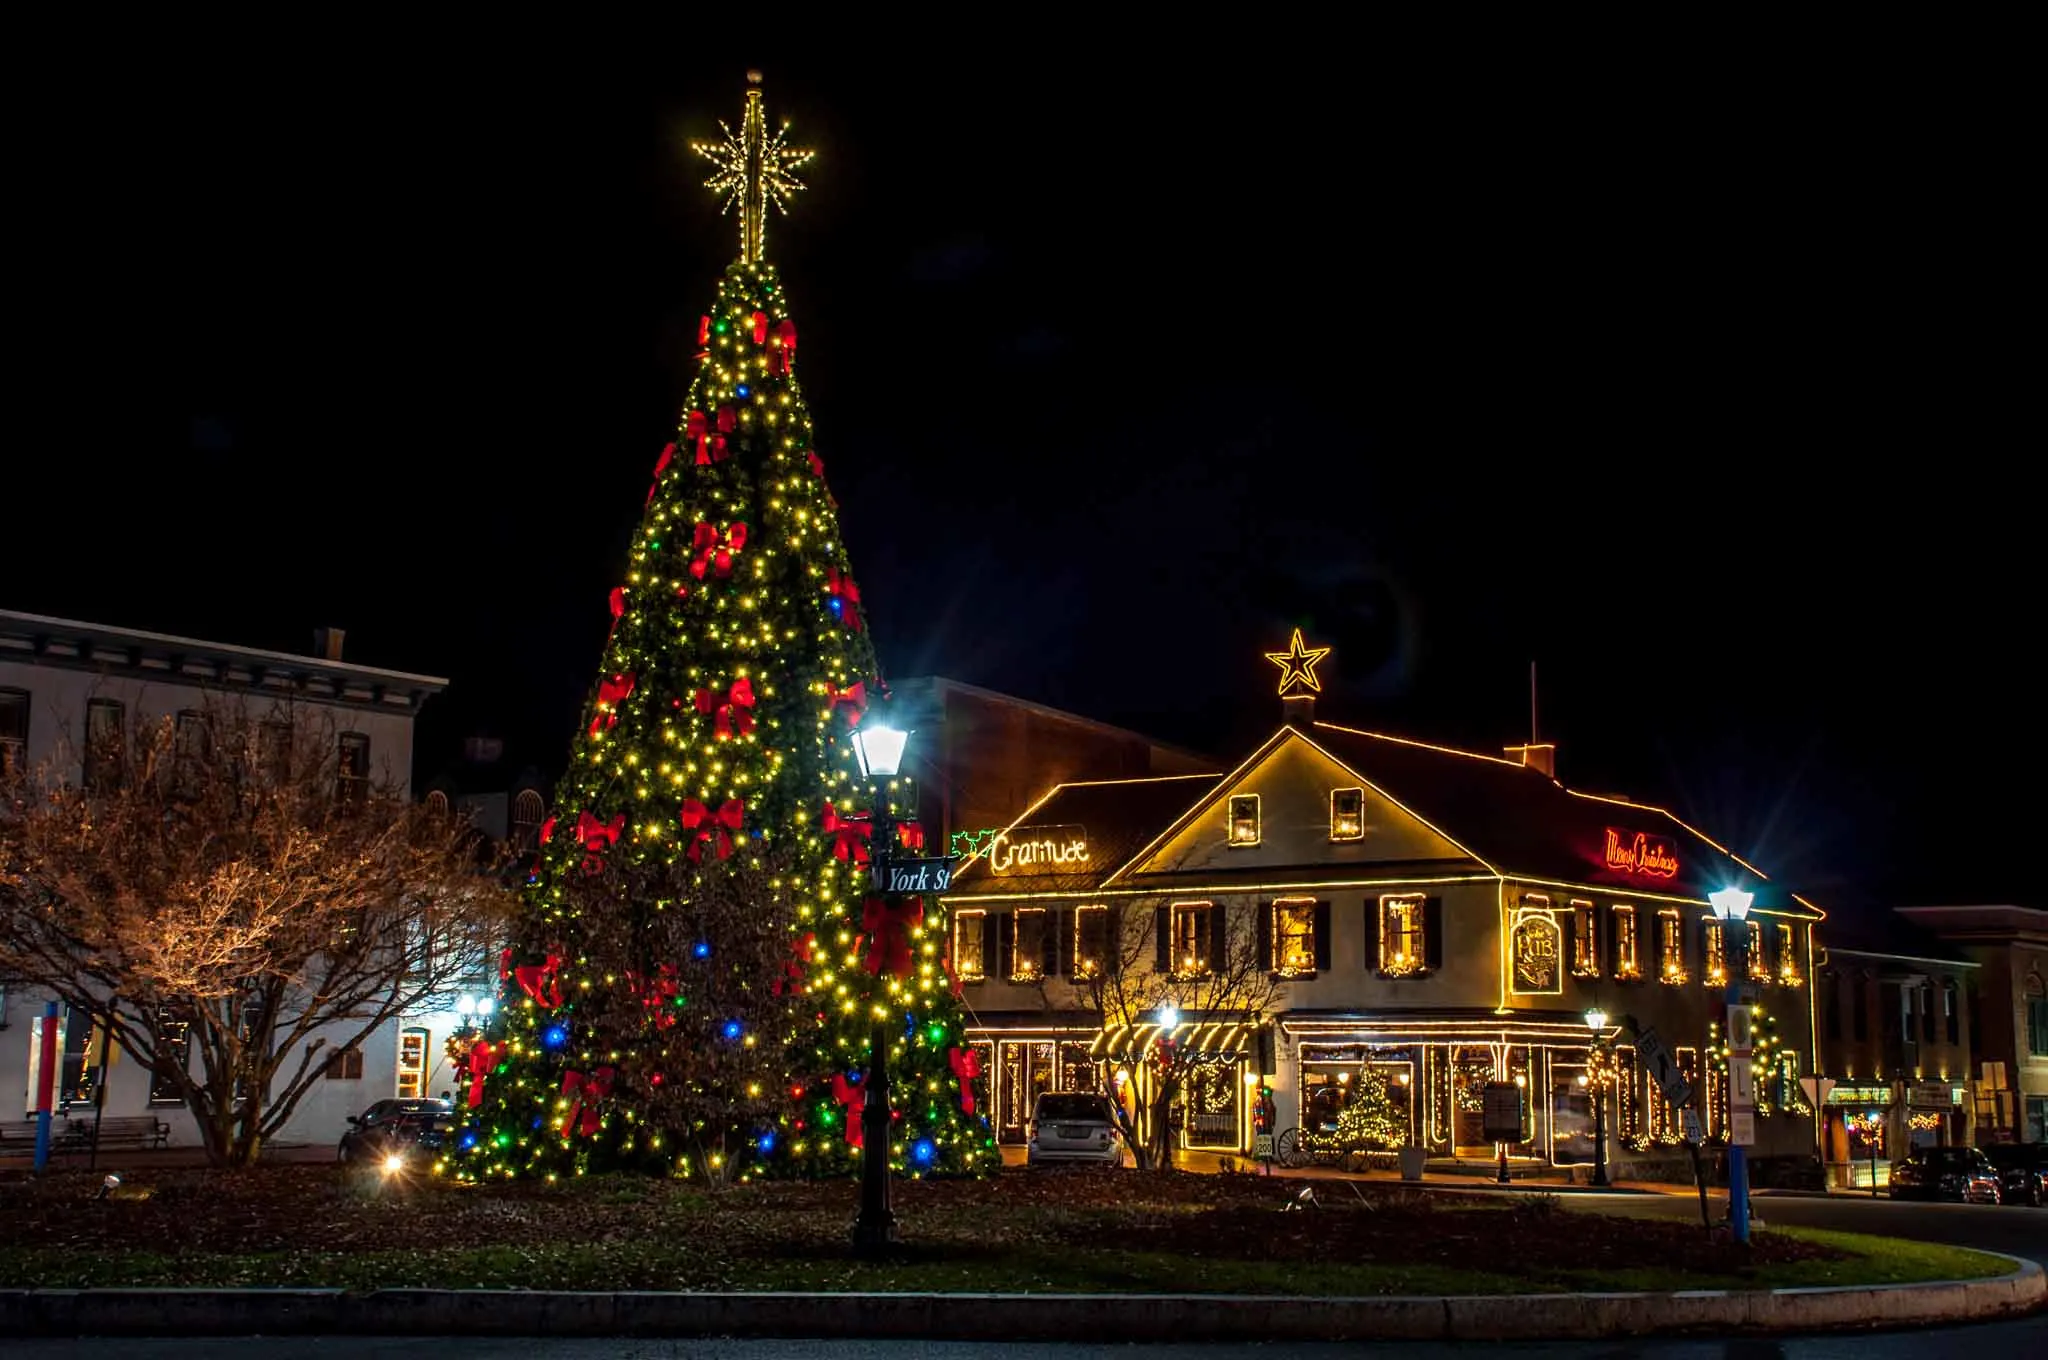 Christmas tree and buildings lit up for Christmas